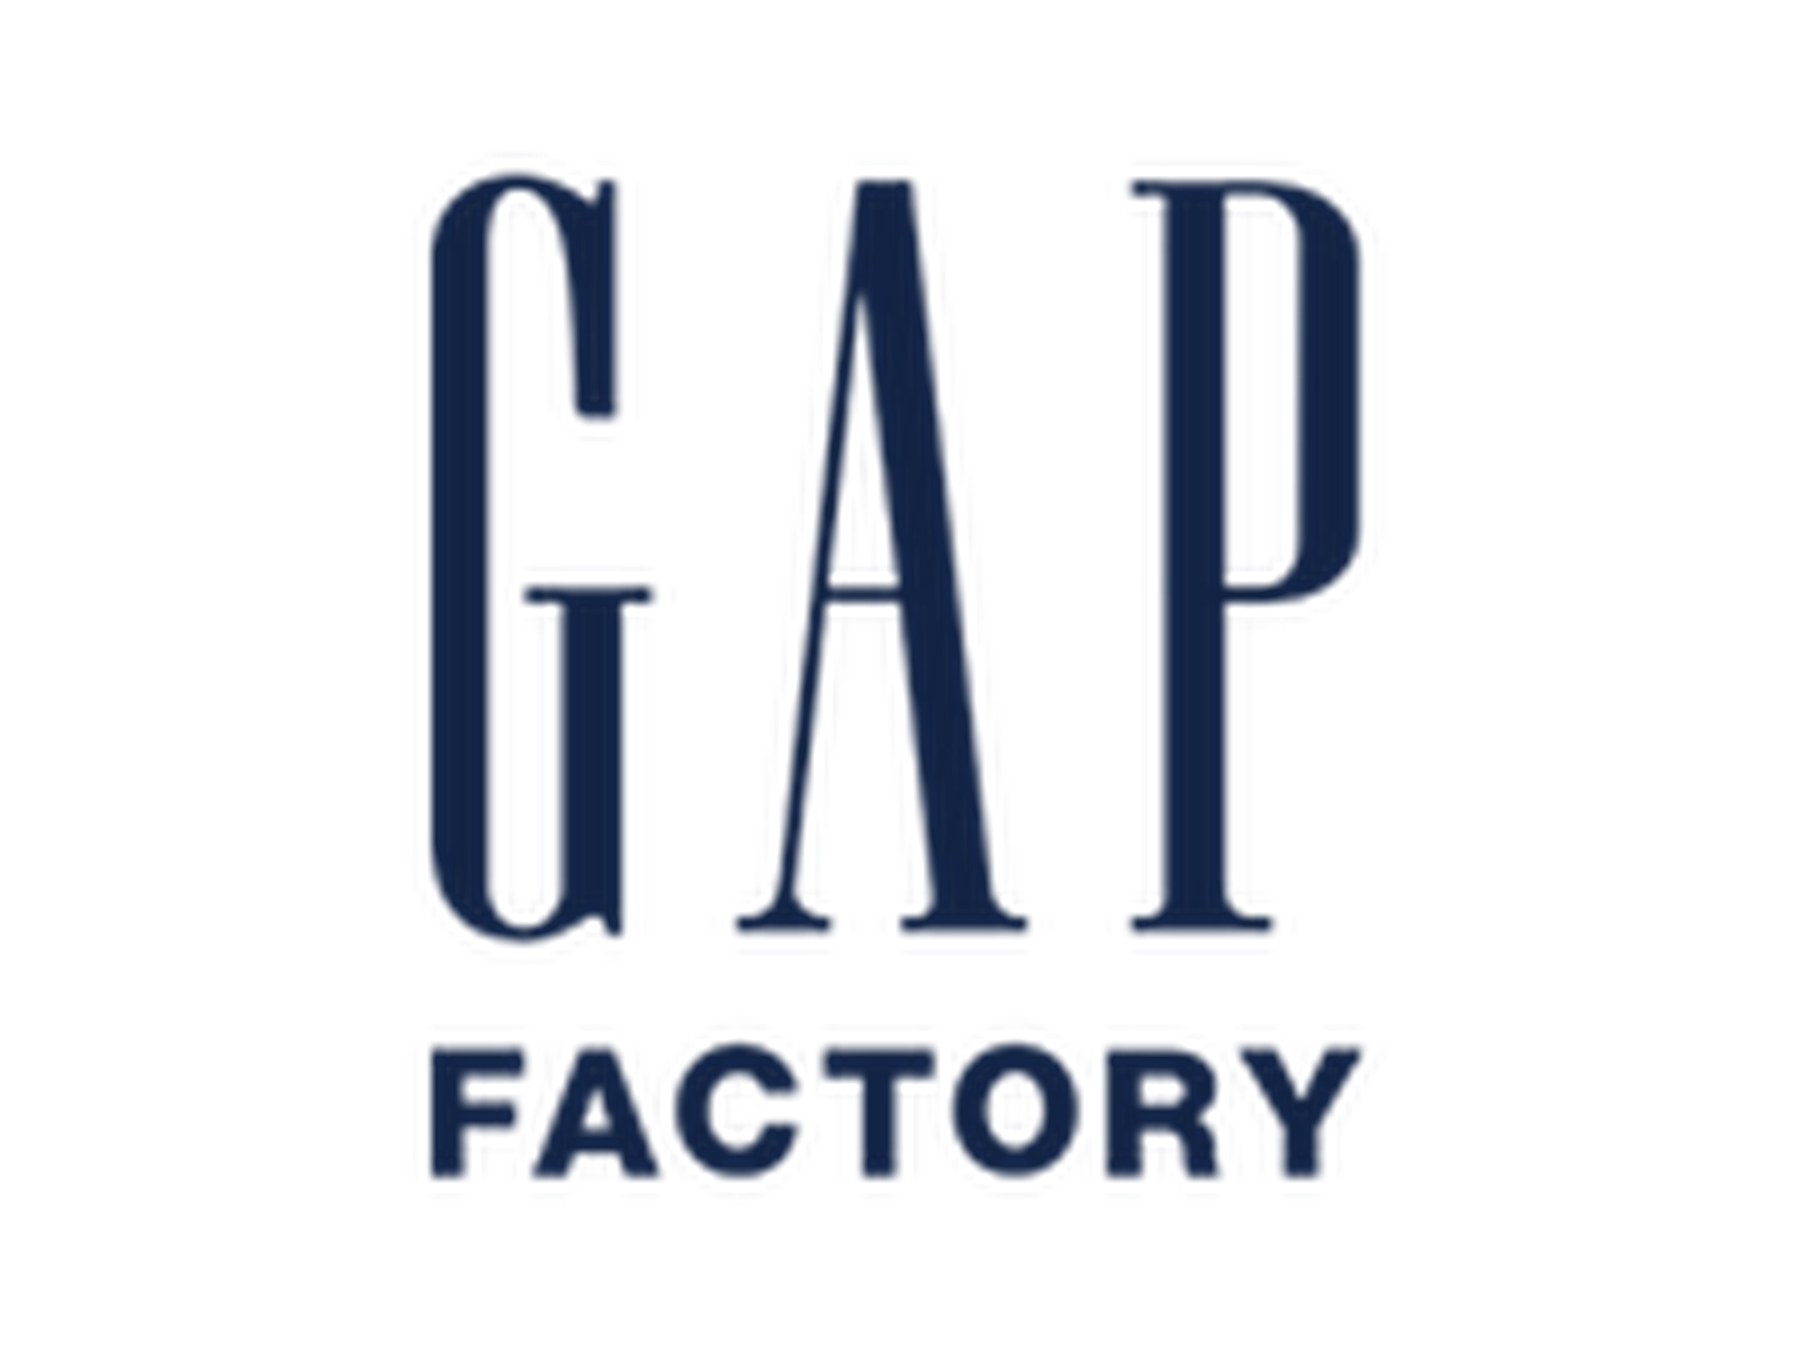 Gap Factory Coupons